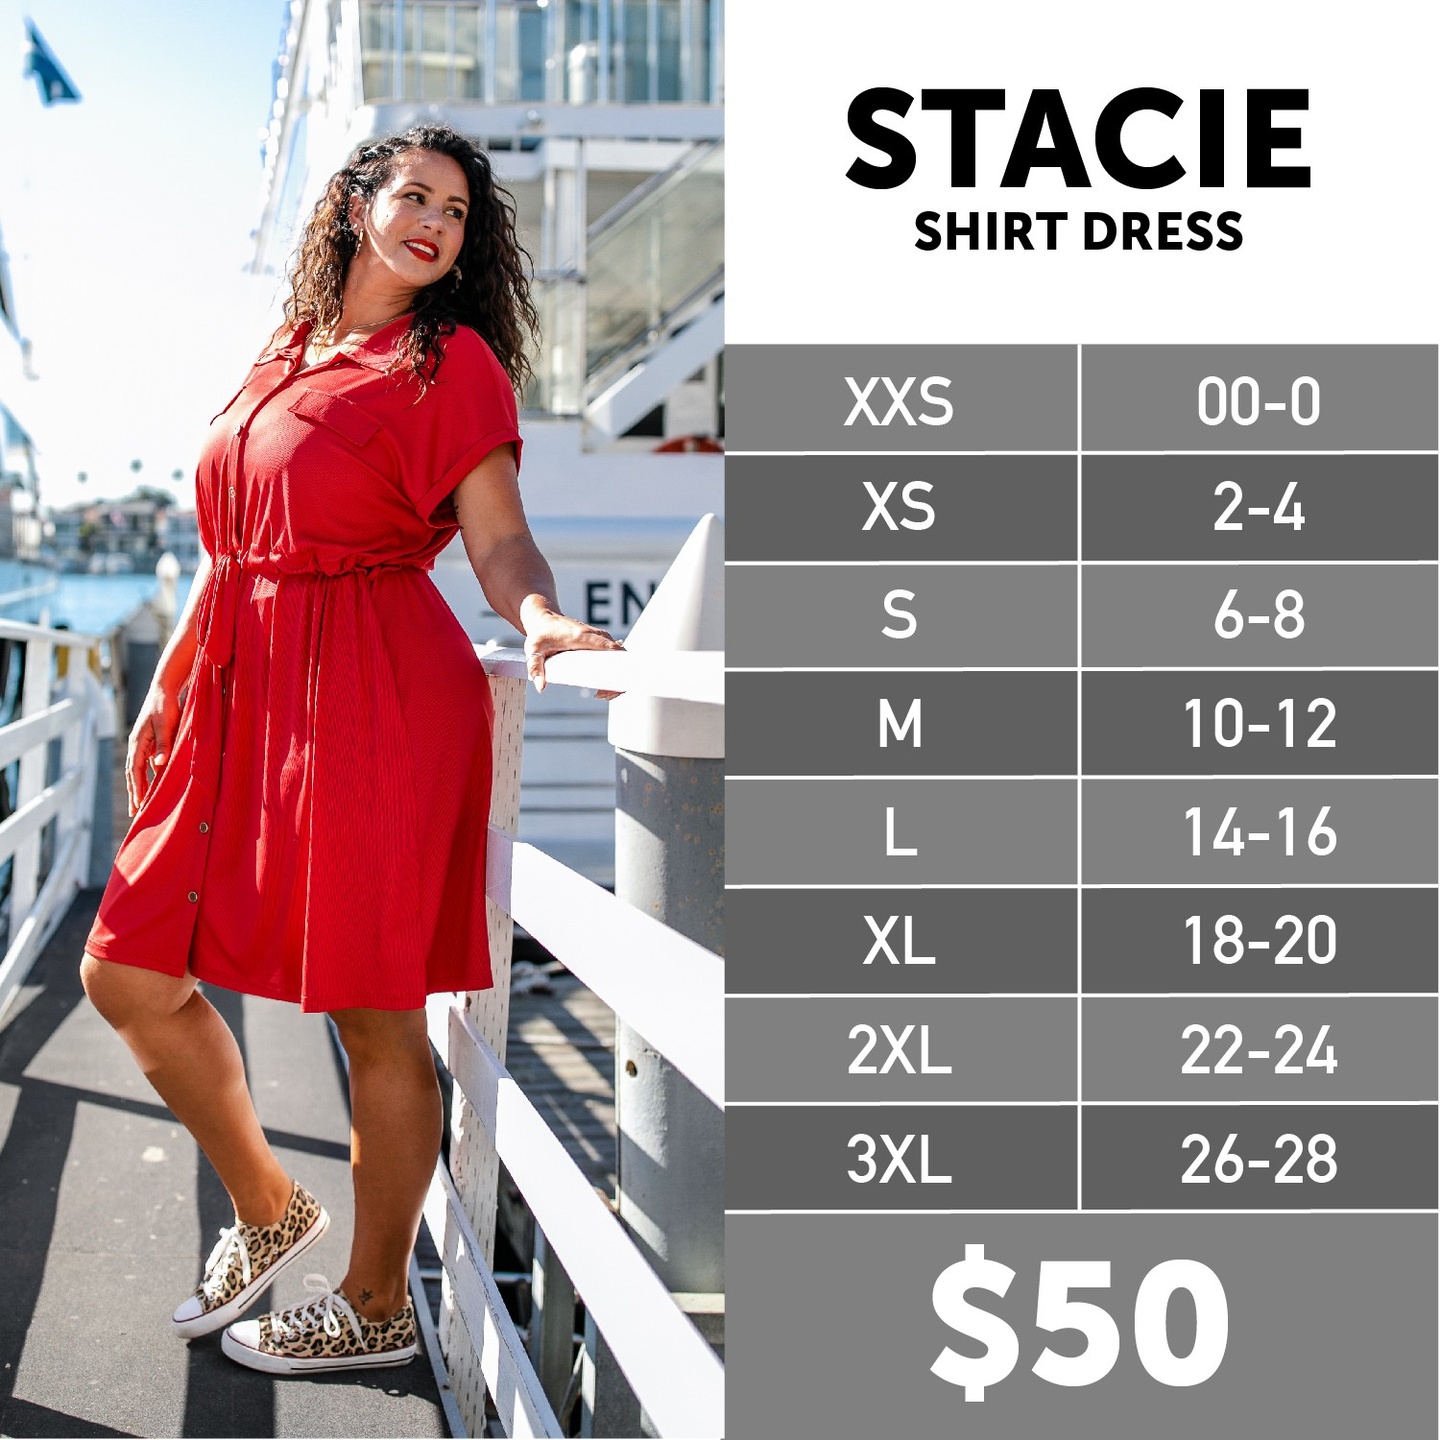 Lularoe Stacie Shirt Dress Size Chart